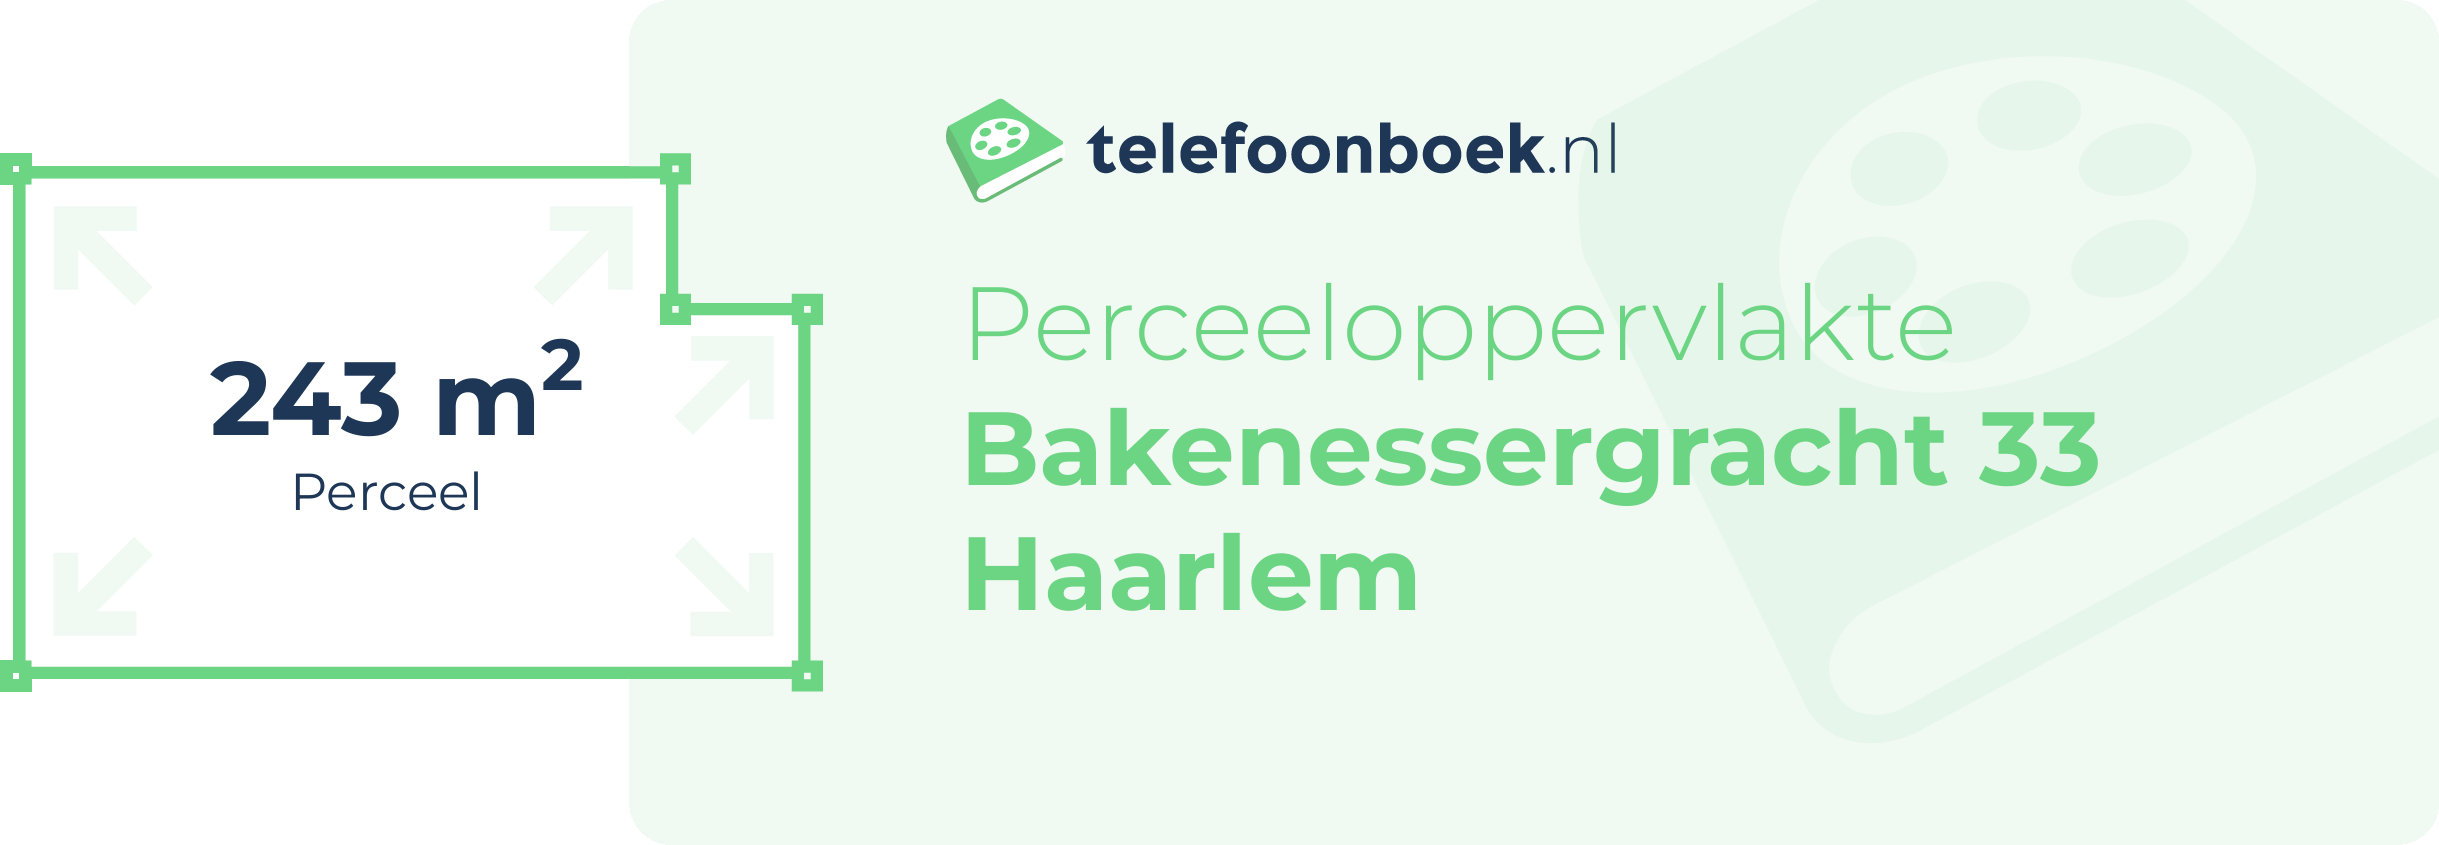 Perceeloppervlakte Bakenessergracht 33 Haarlem